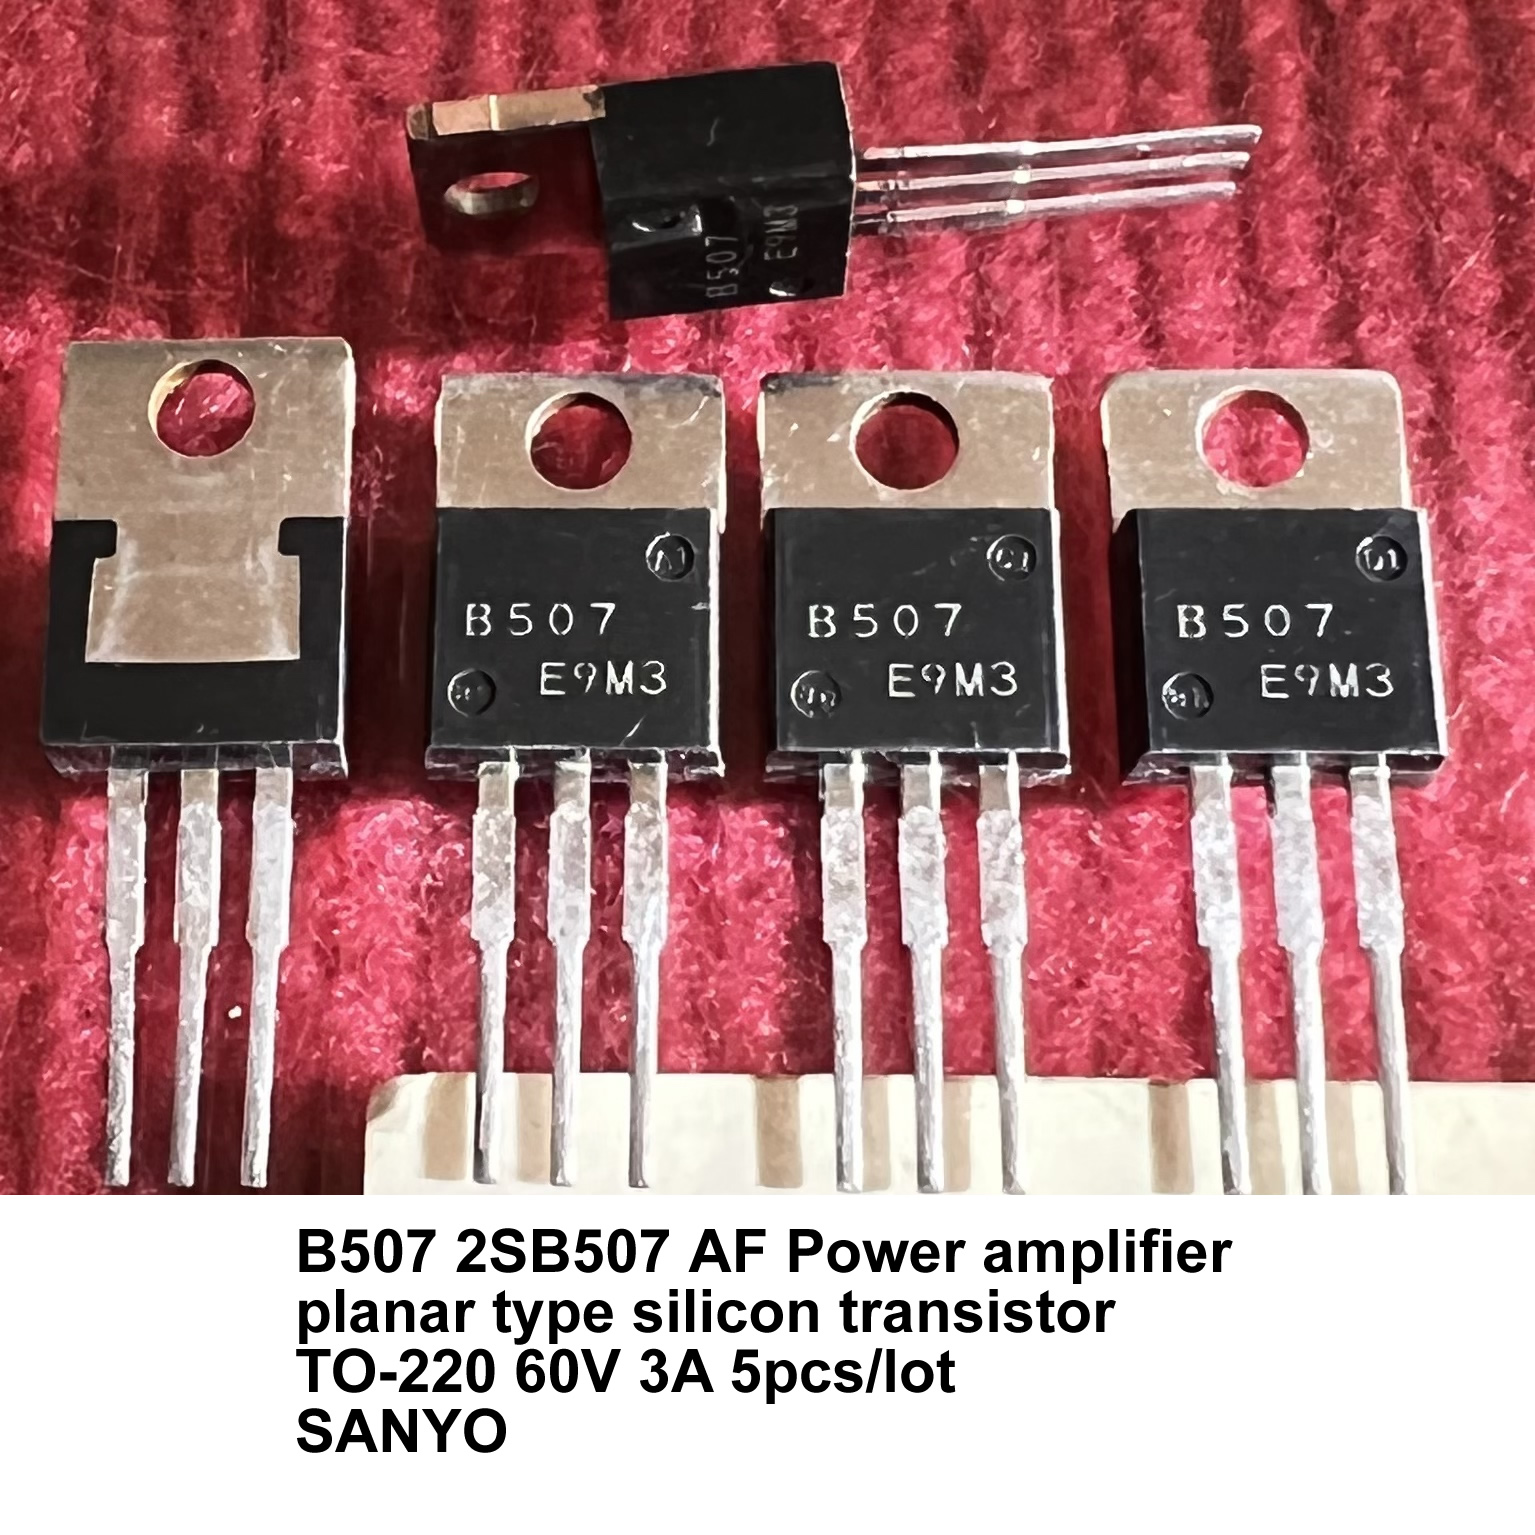 B507 2SB507 AF Power amplifier planar type silicon transistor TO